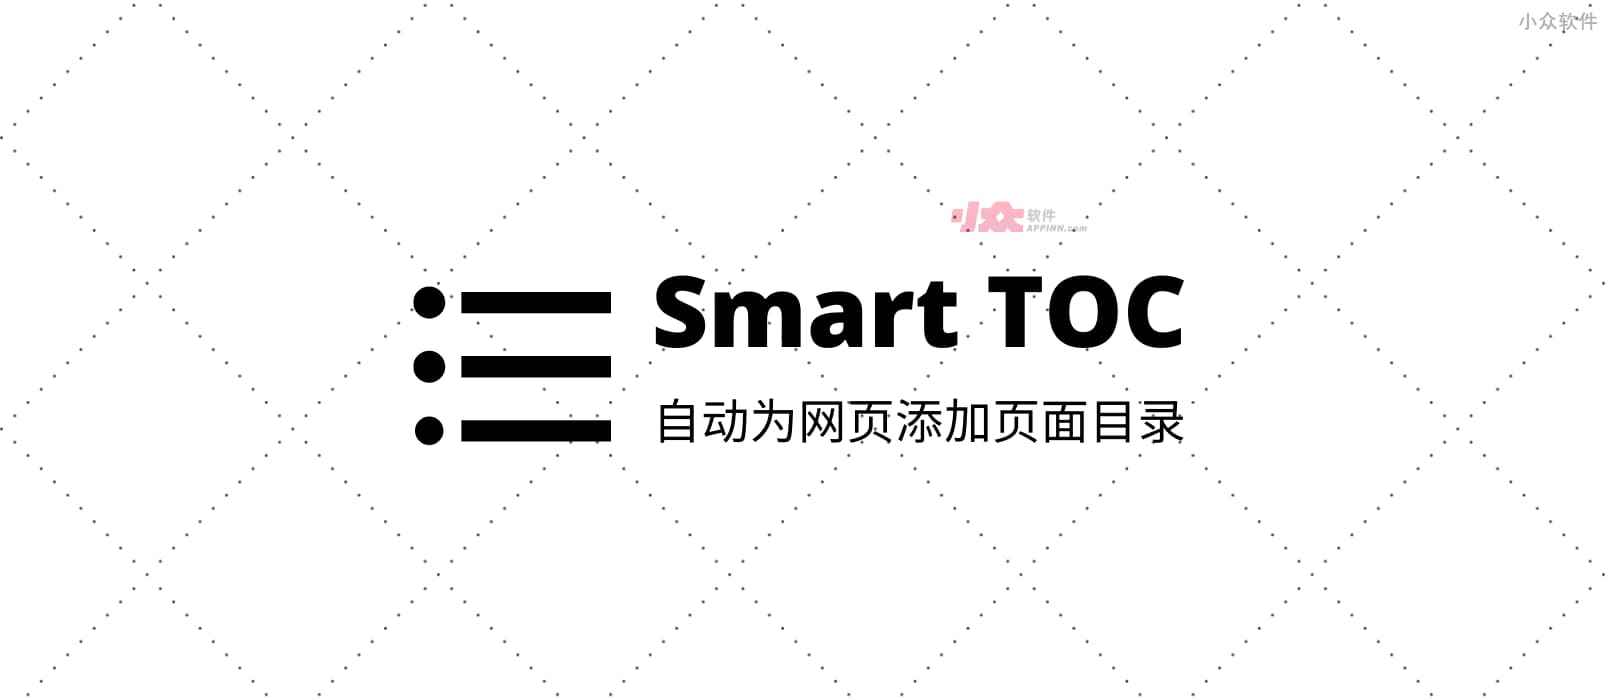 Smart TOC – 生成「智能网页大纲」，自动为 Chrome 添加页面目录